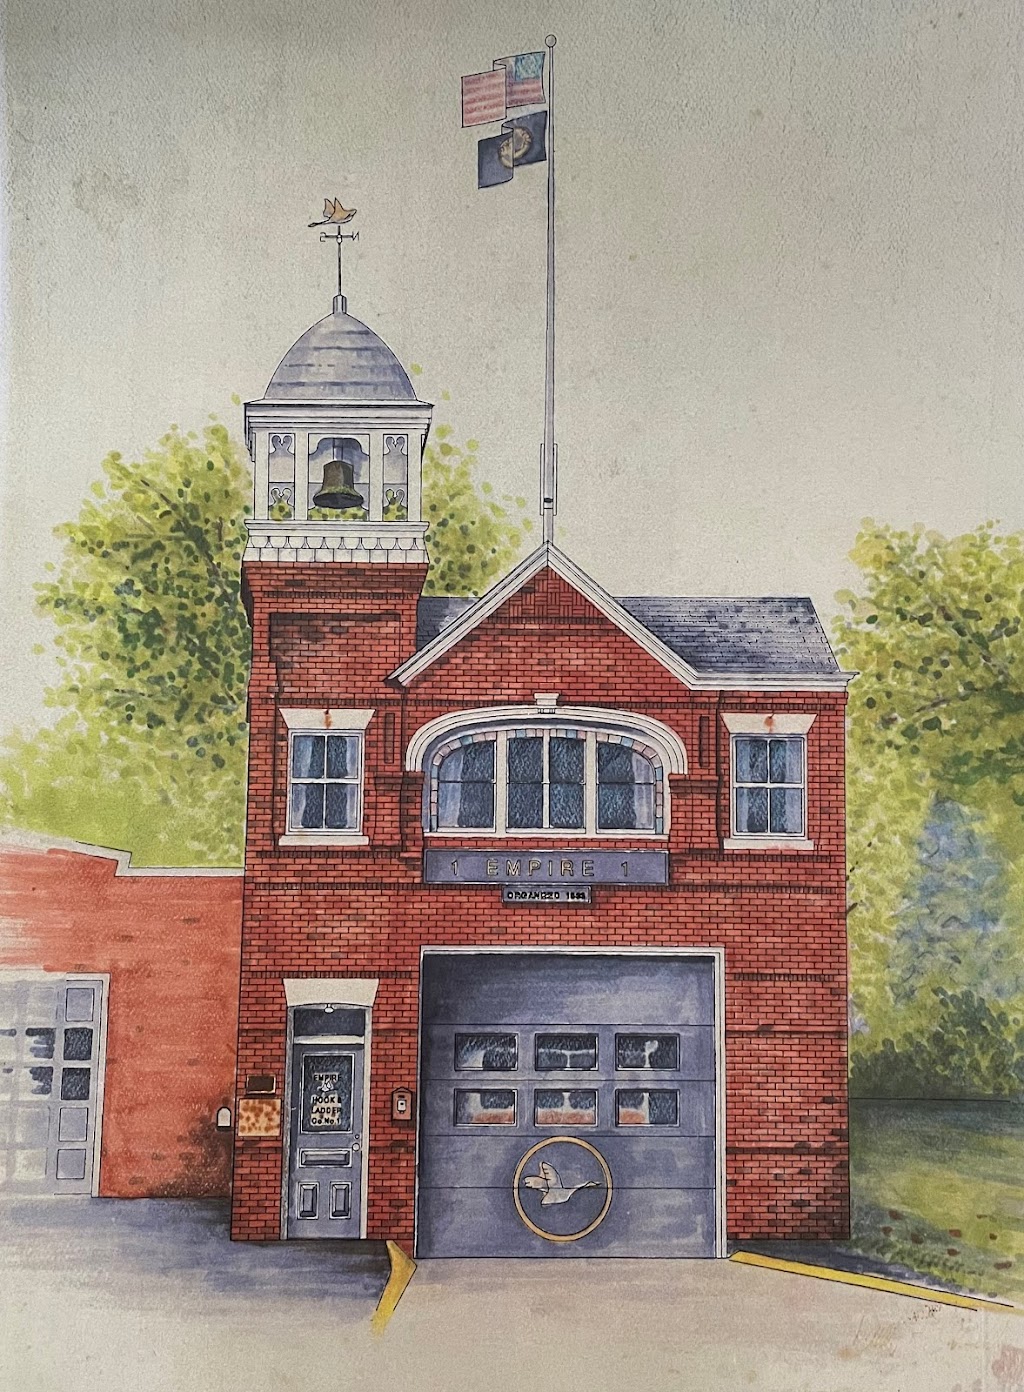 Nyack Fire Department - Empire Hook & Ladder Company #1 | 330 N Broadway, Nyack, NY 10960 | Phone: (845) 358-0198